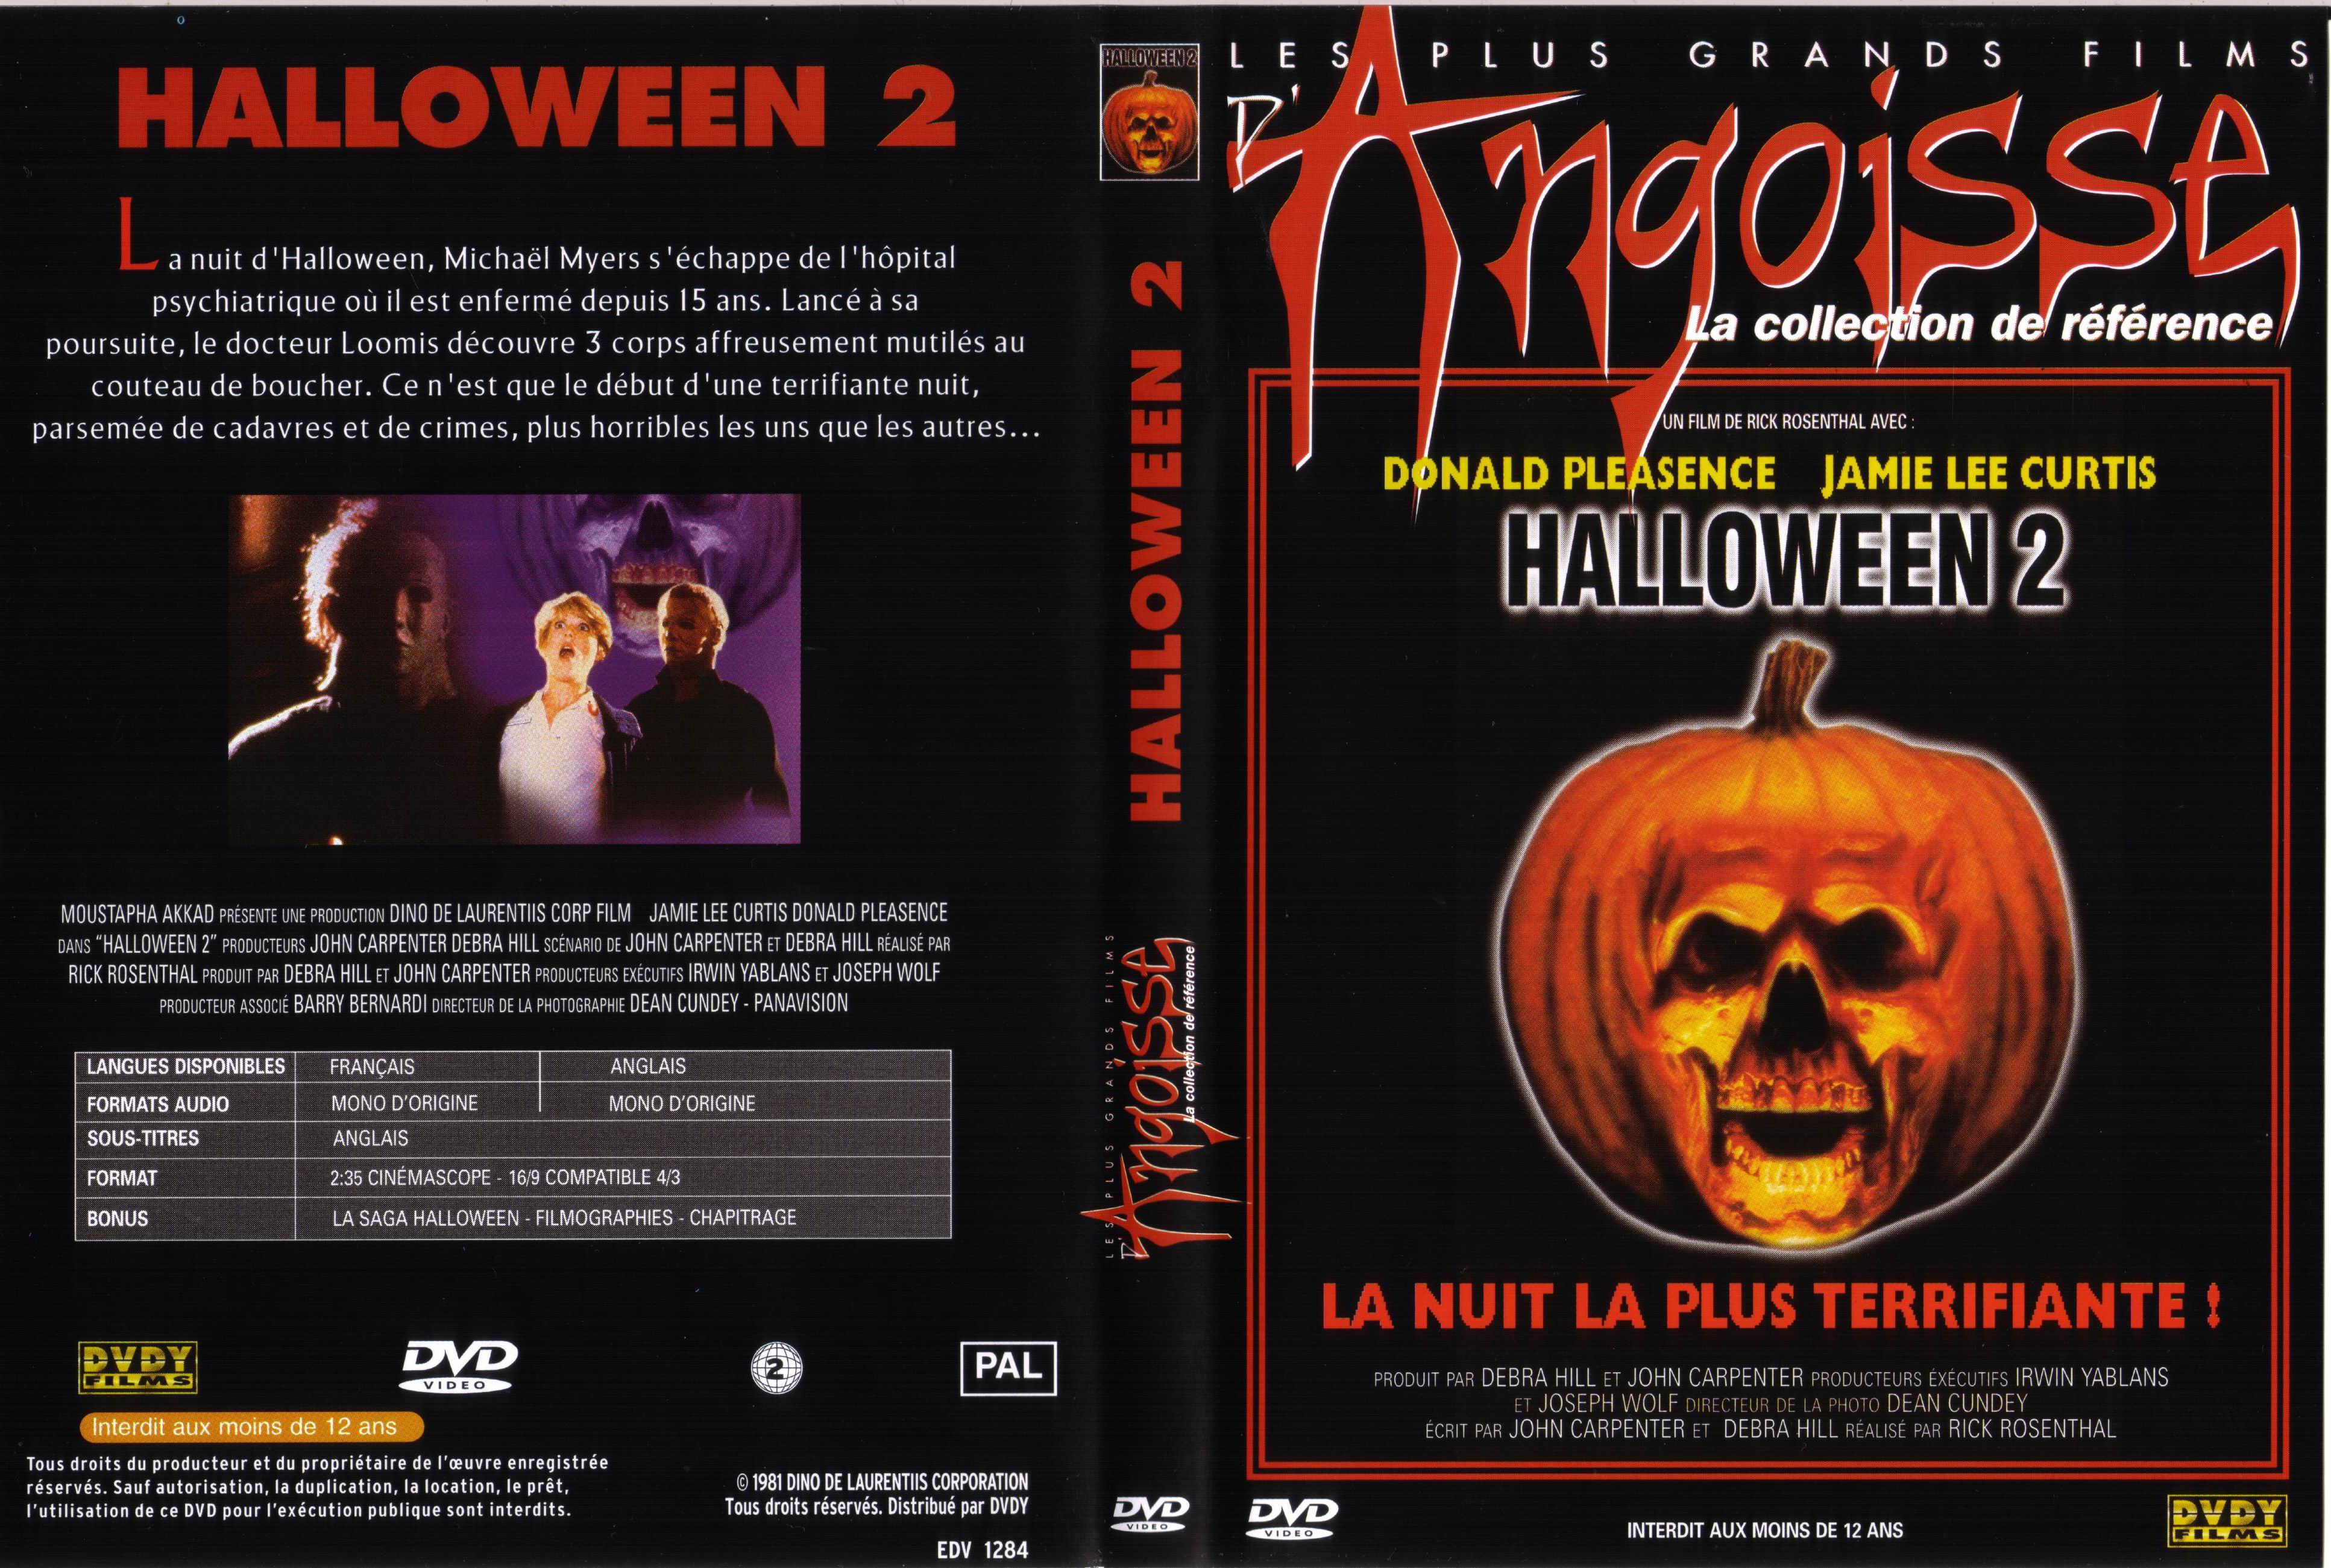 Jaquette DVD Halloween 2